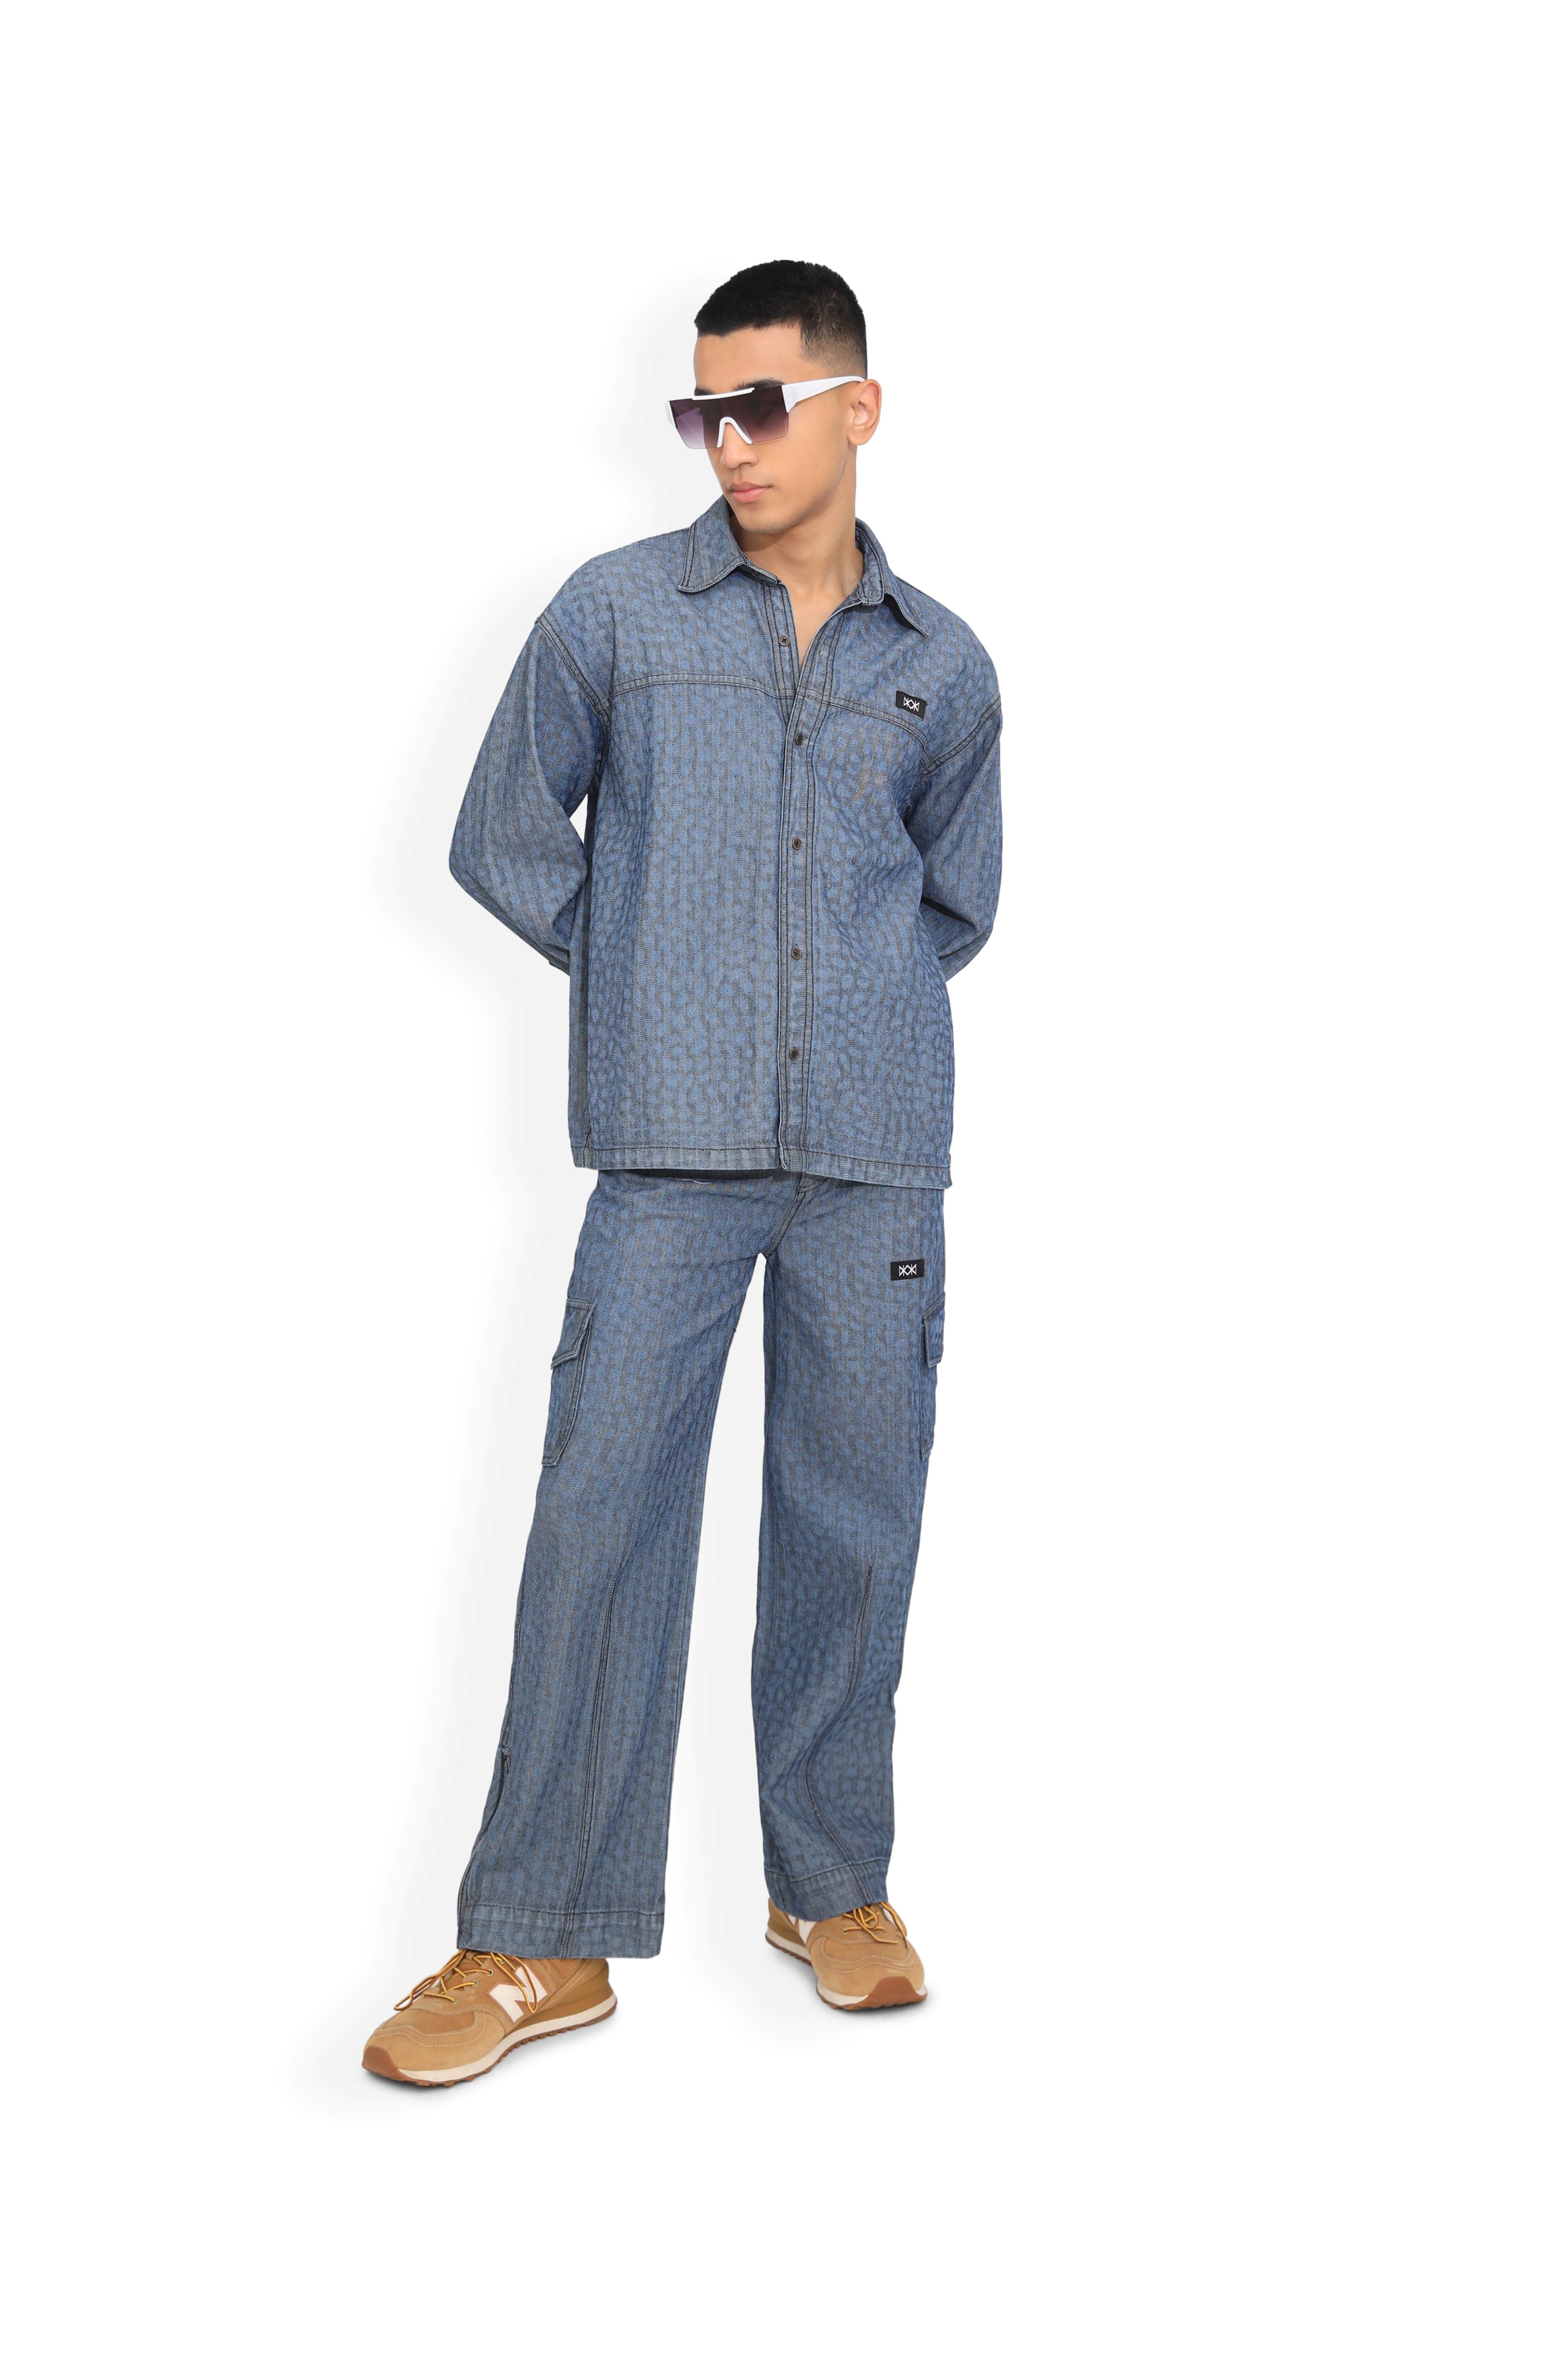 Casual Wear Boys Full Sleeve Blue Denim Shirt at Rs 270/piece in Ahmedabad  | ID: 22332860433